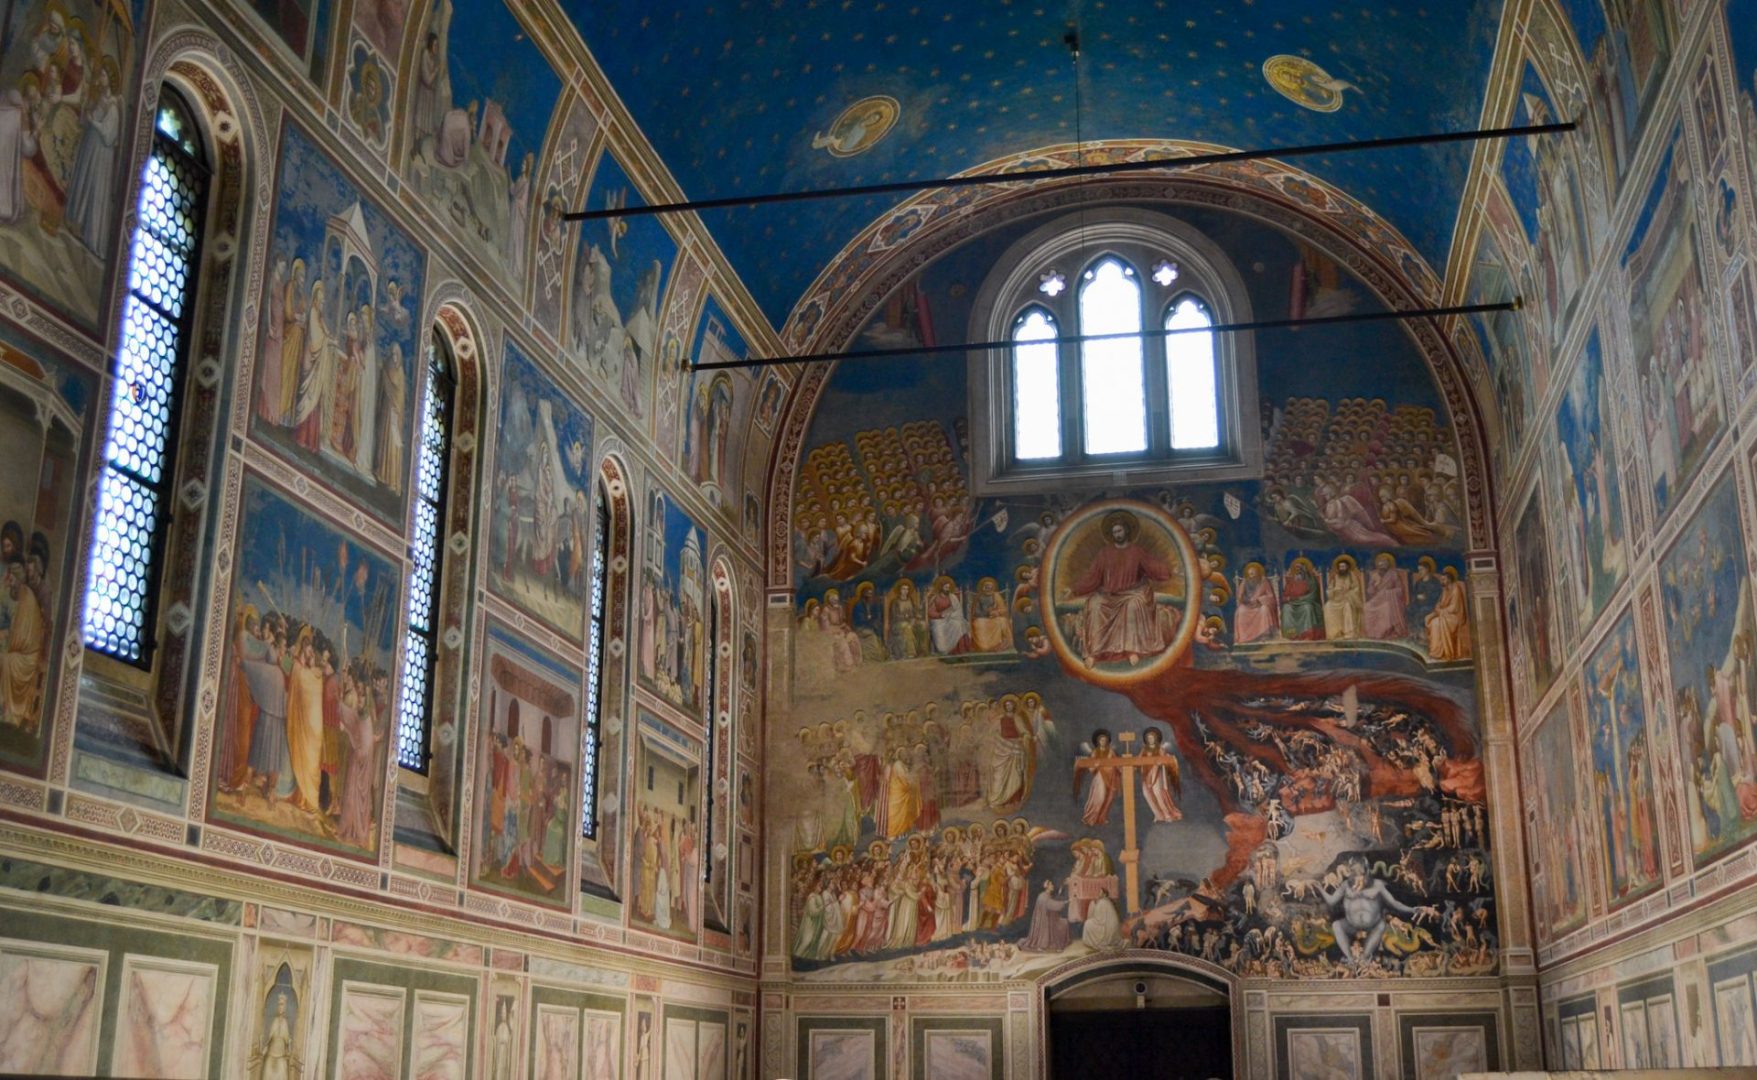 Frescoes inside the Scrovegni Chapel in Padua